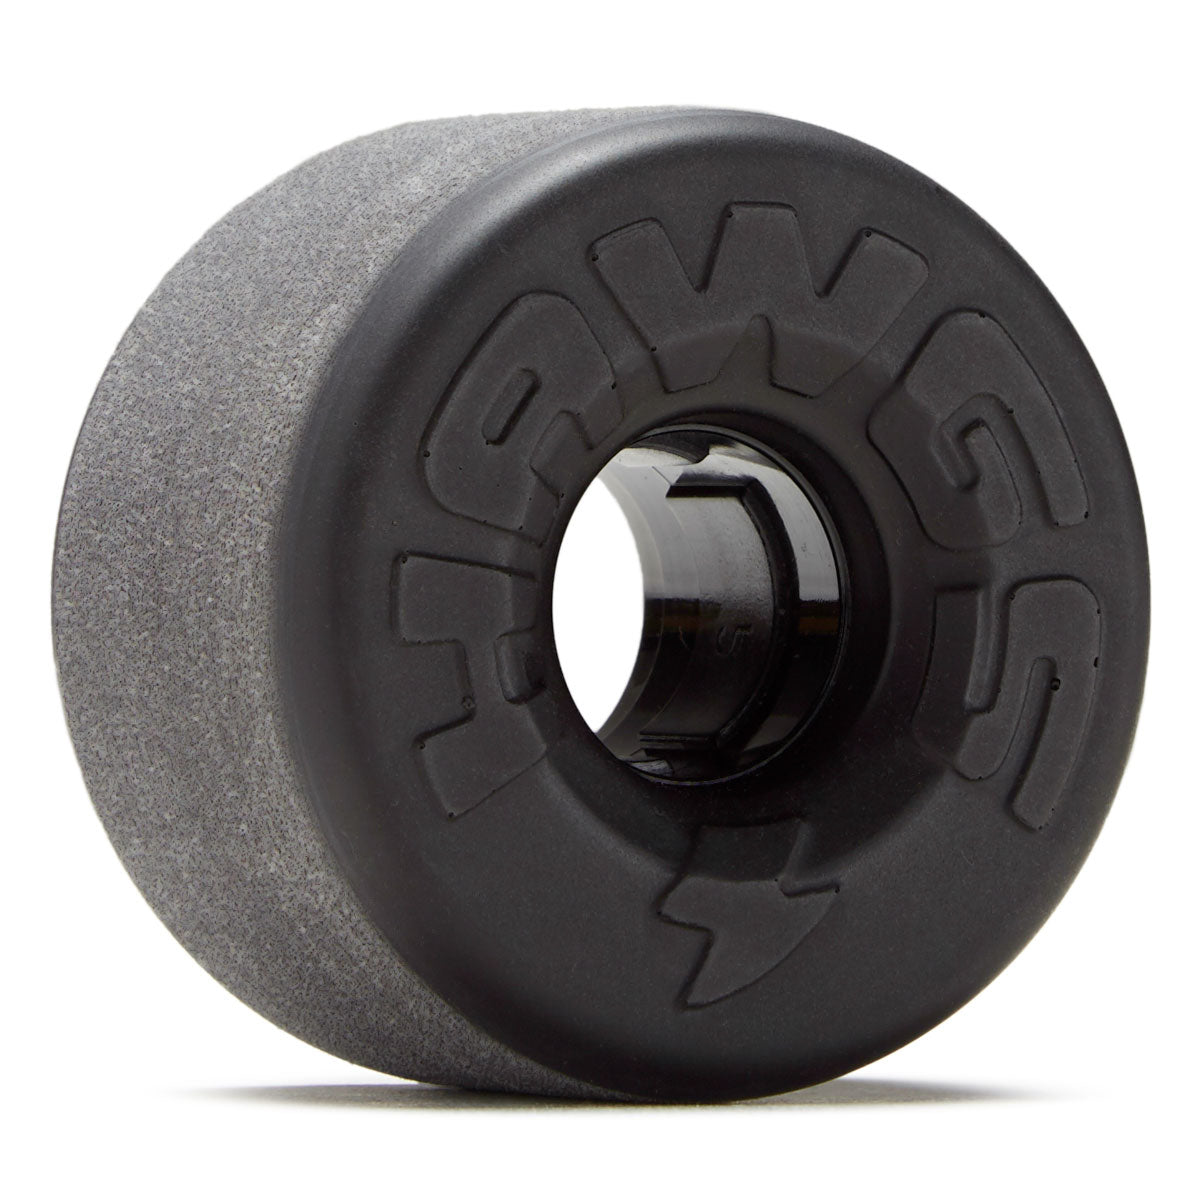 Hawgs EZ 78a Stone Ground Longboard Wheels - Black - 63mm image 1